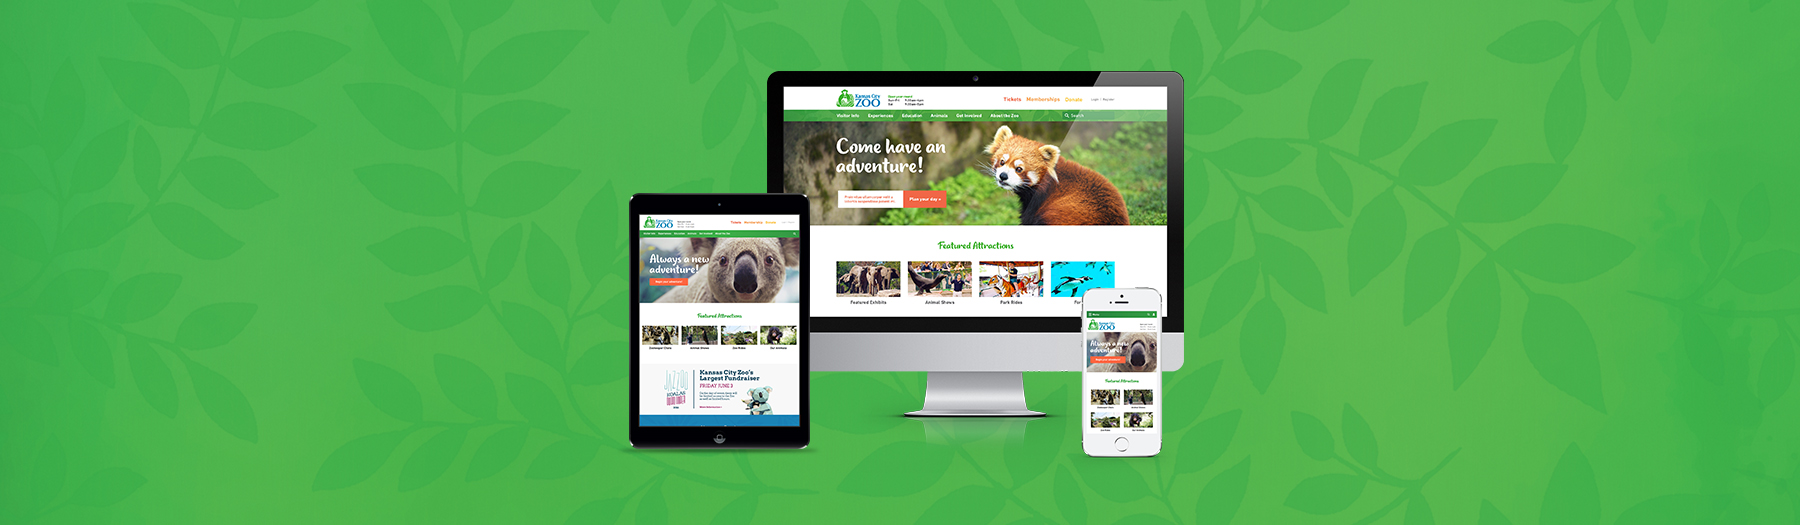 Responsive Web Design For The Kansas City Zoo